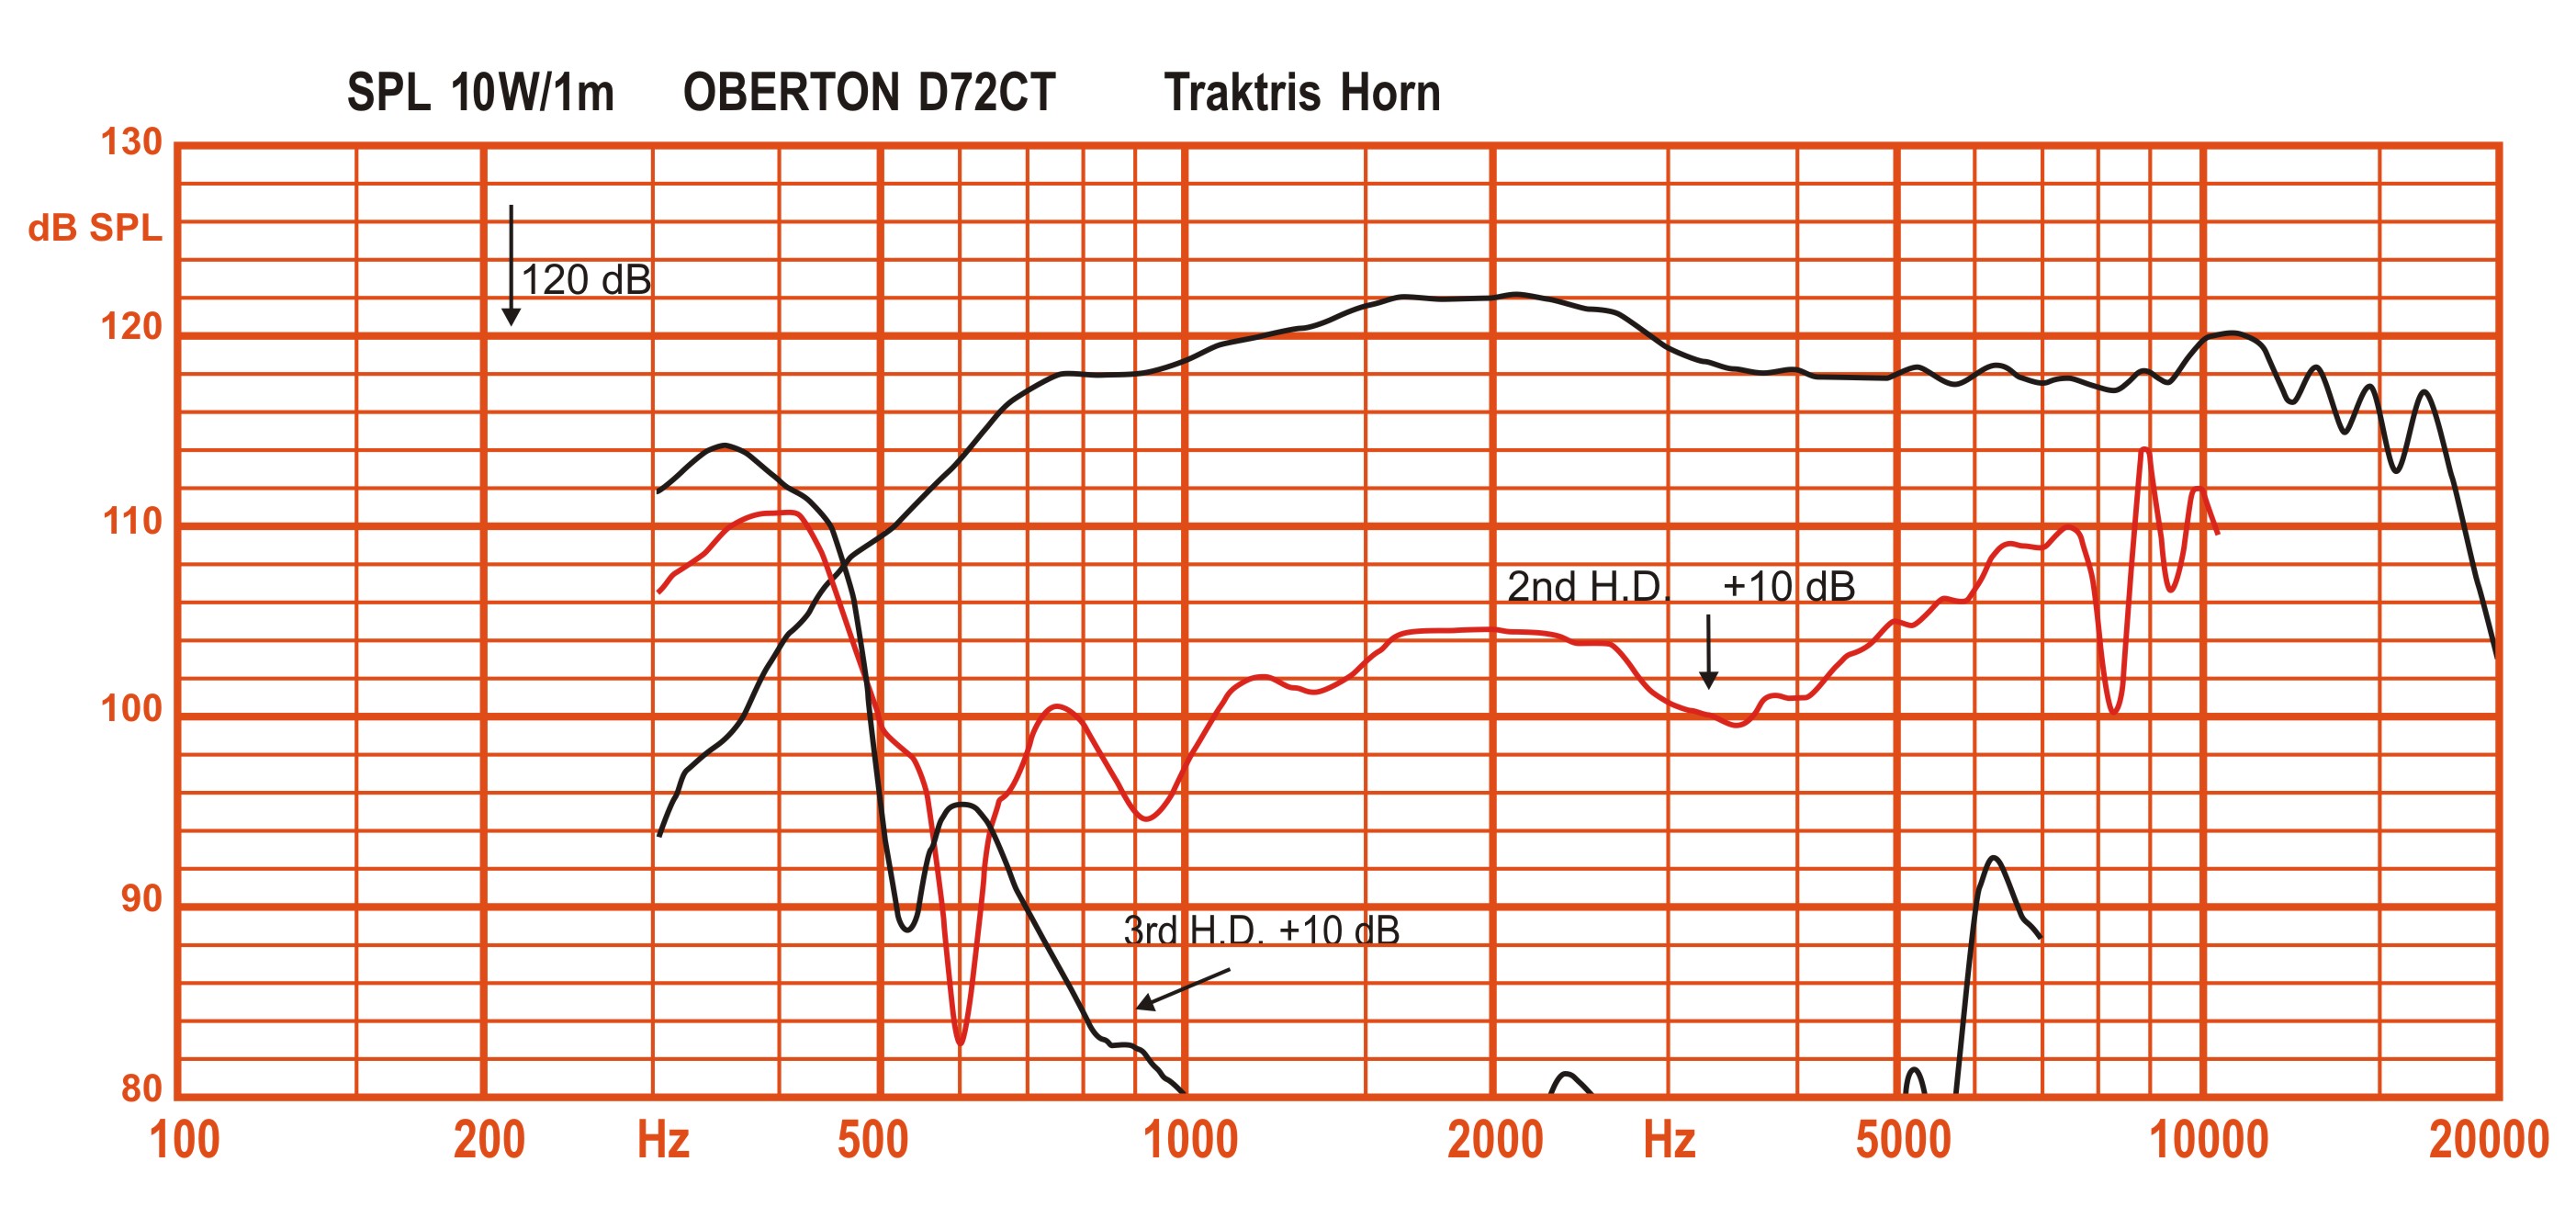 Oberton D72CT